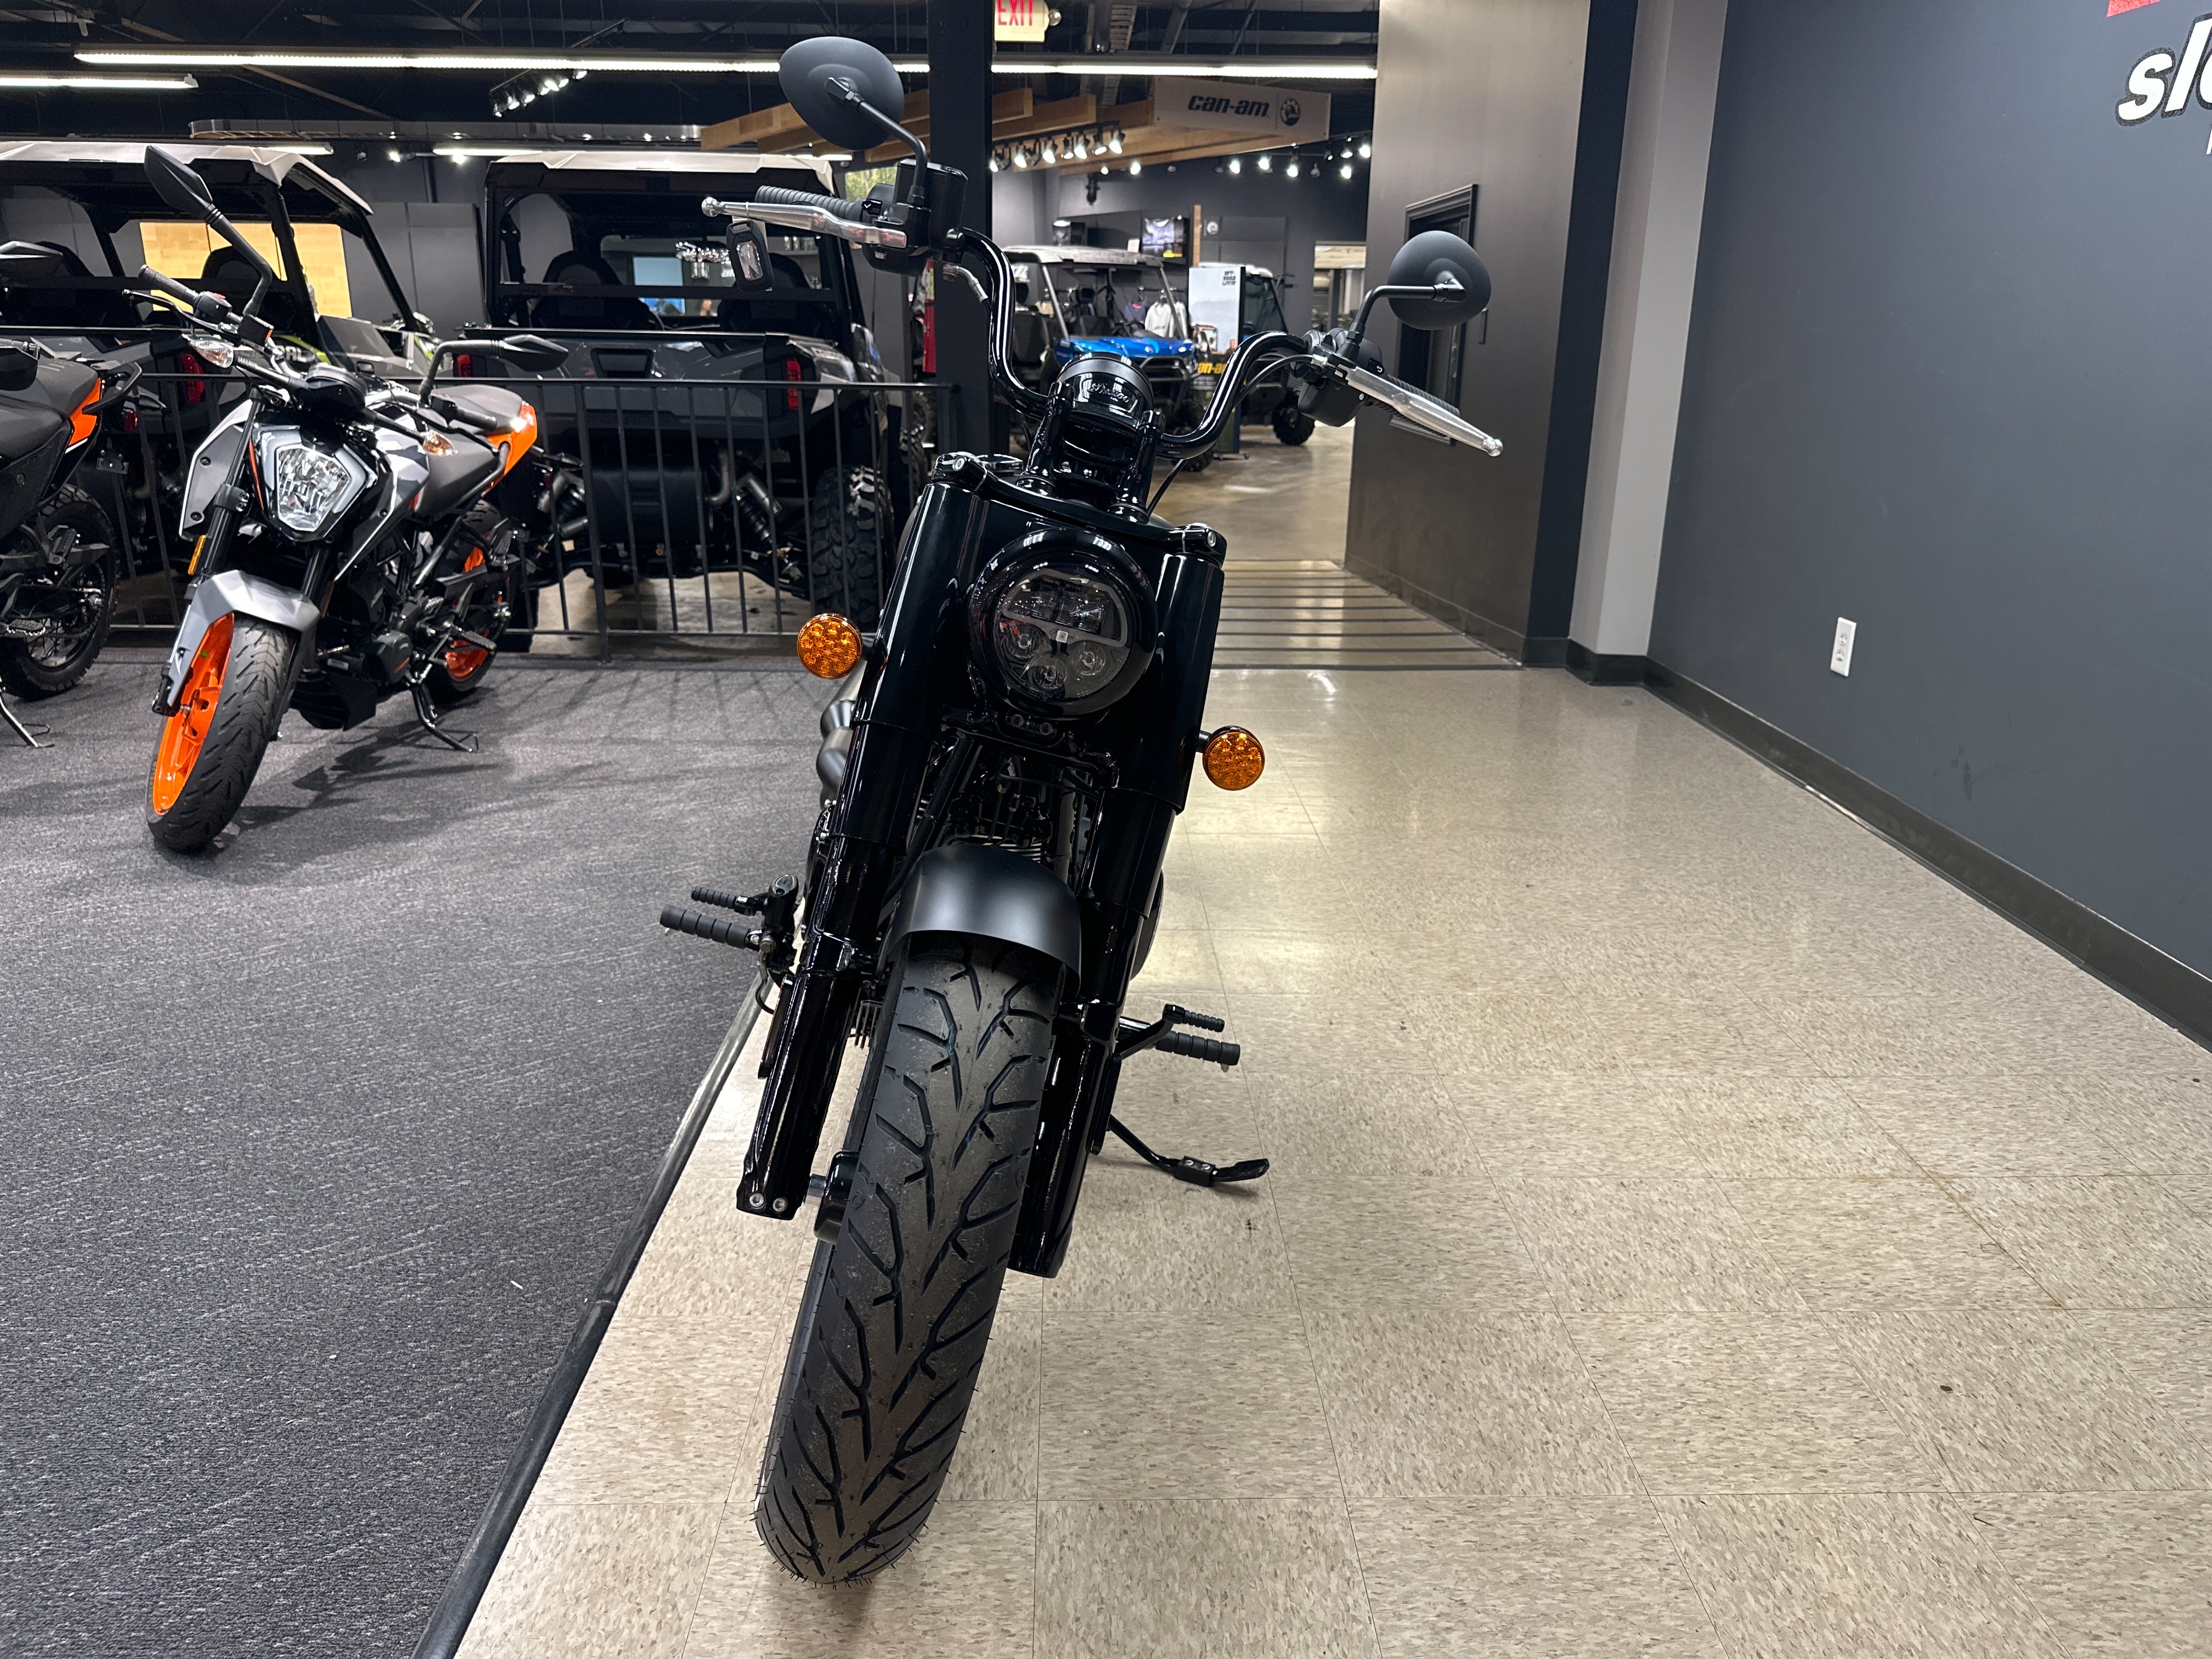 2023 Indian Motorcycle Chief Bobber Dark Horse at Sloans Motorcycle ATV, Murfreesboro, TN, 37129